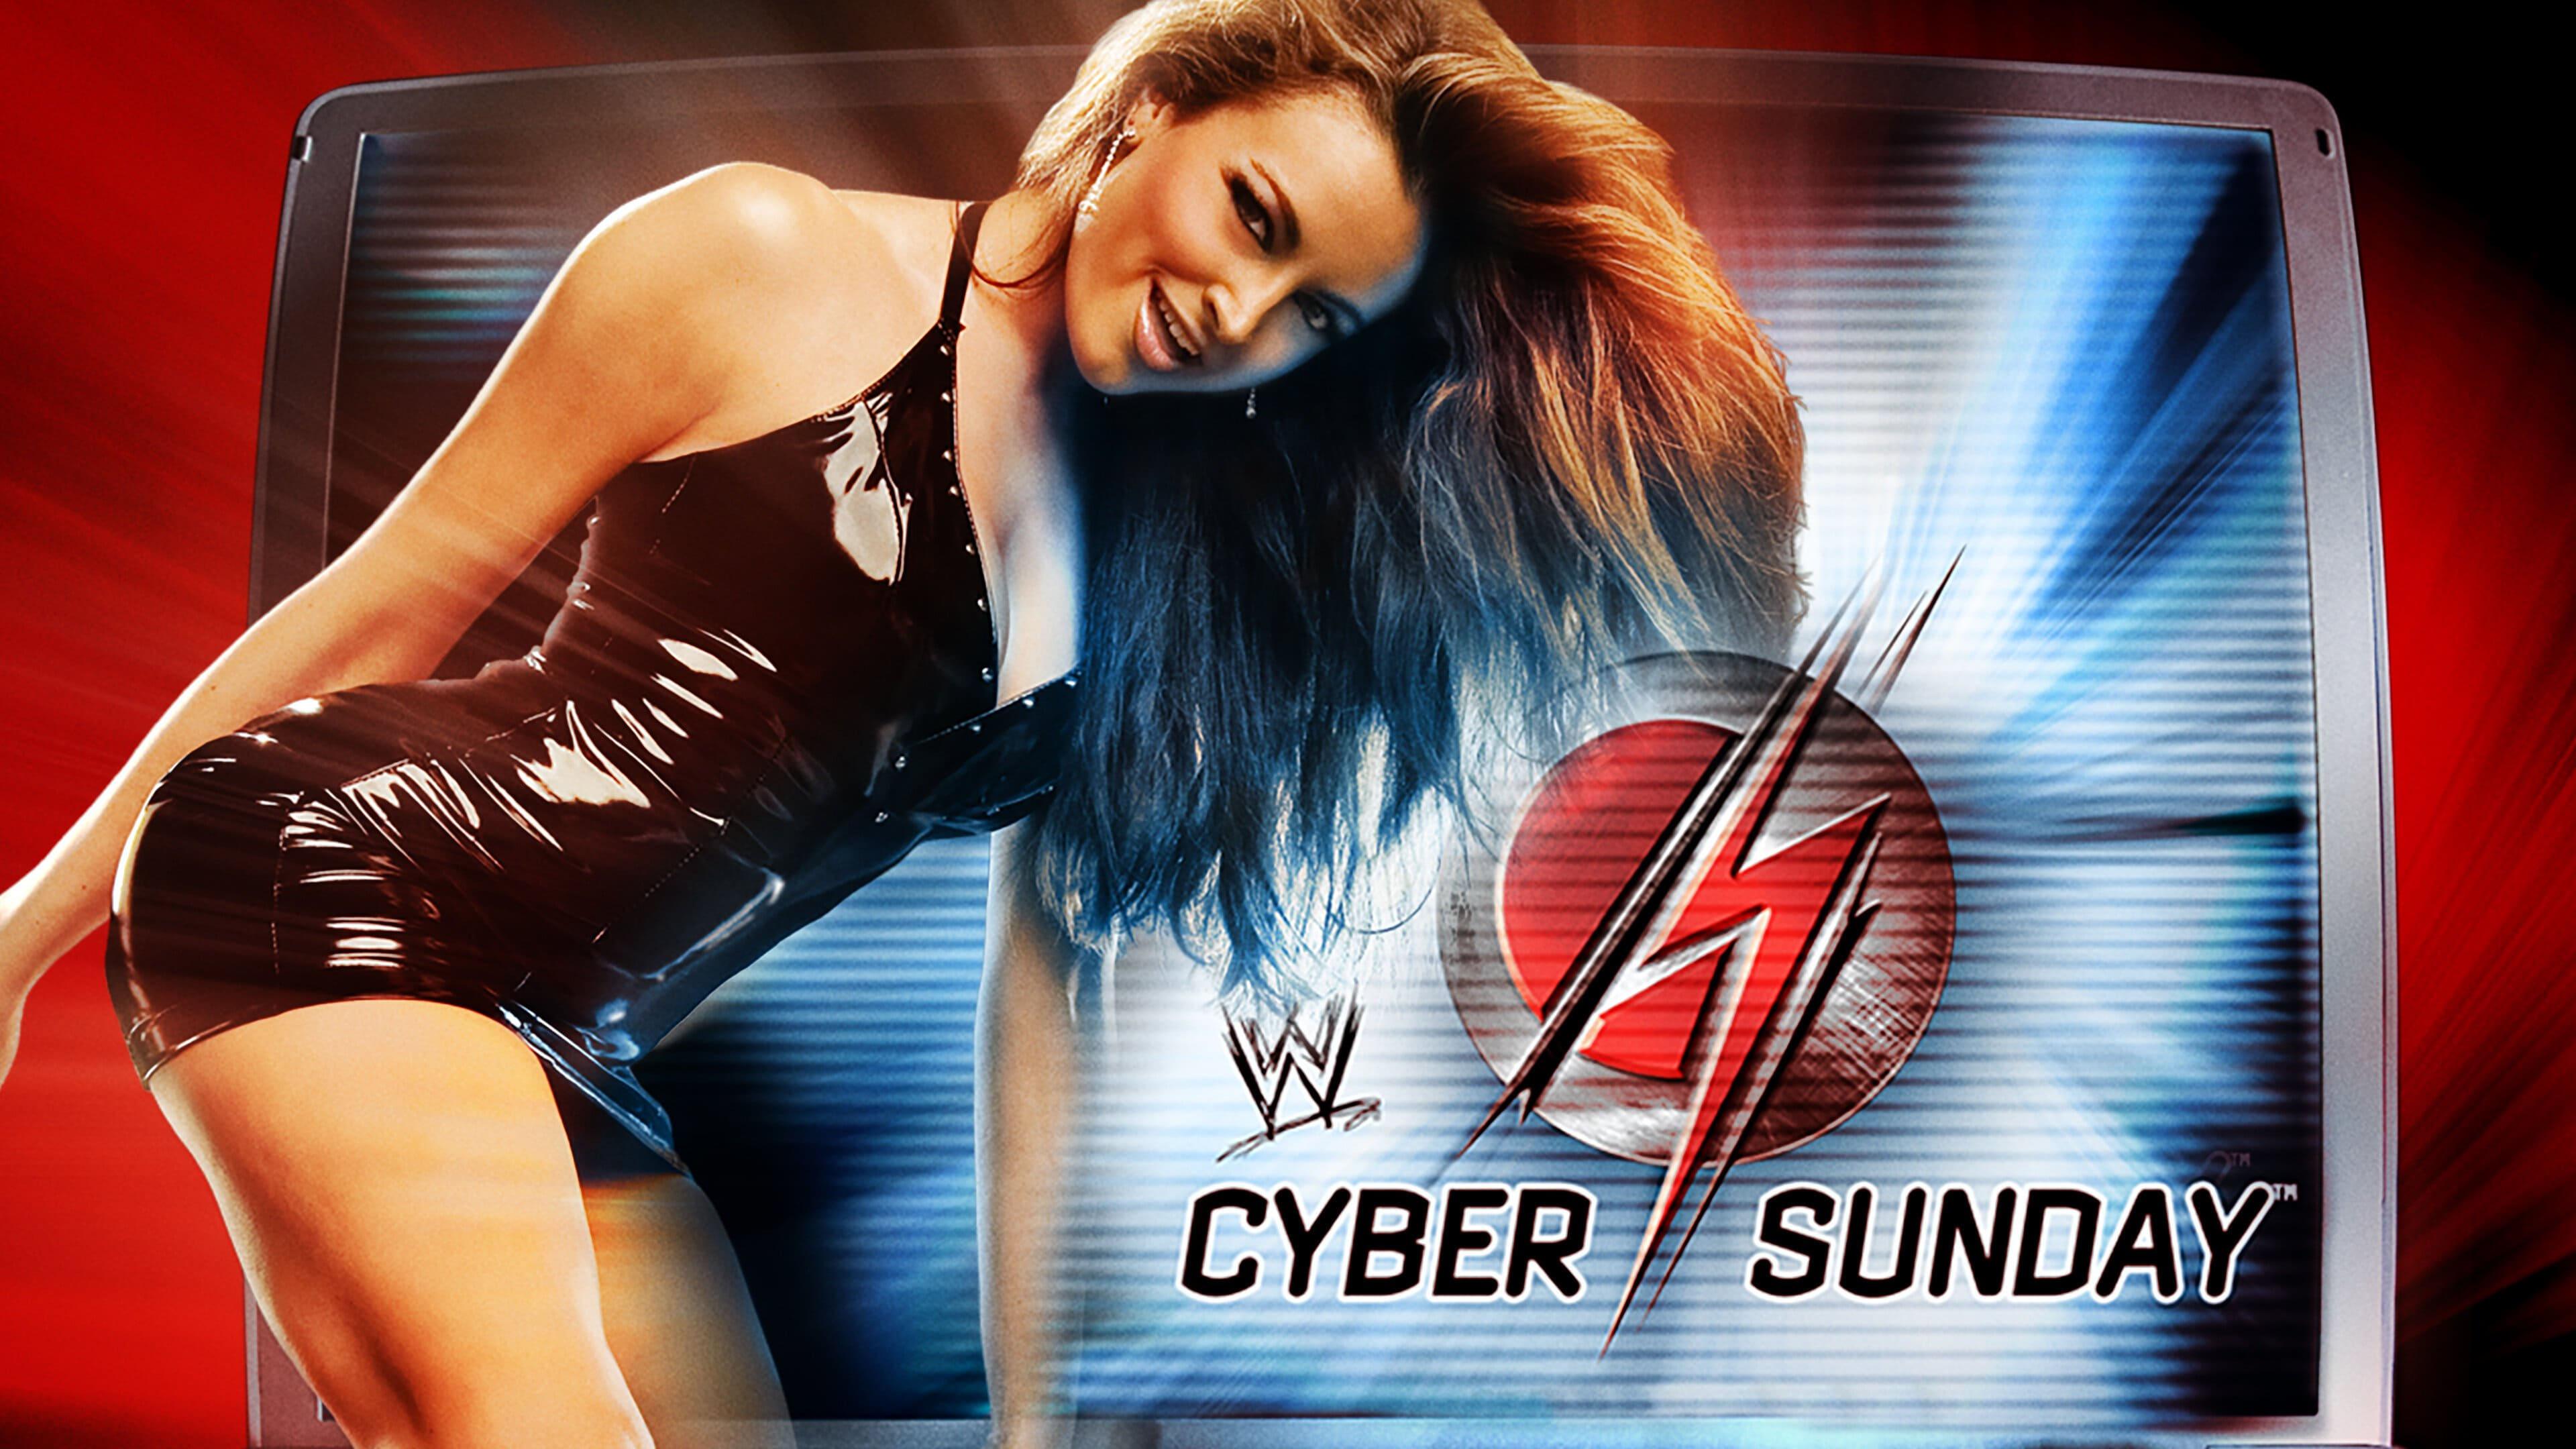 WWE Cyber Sunday 2006 backdrop